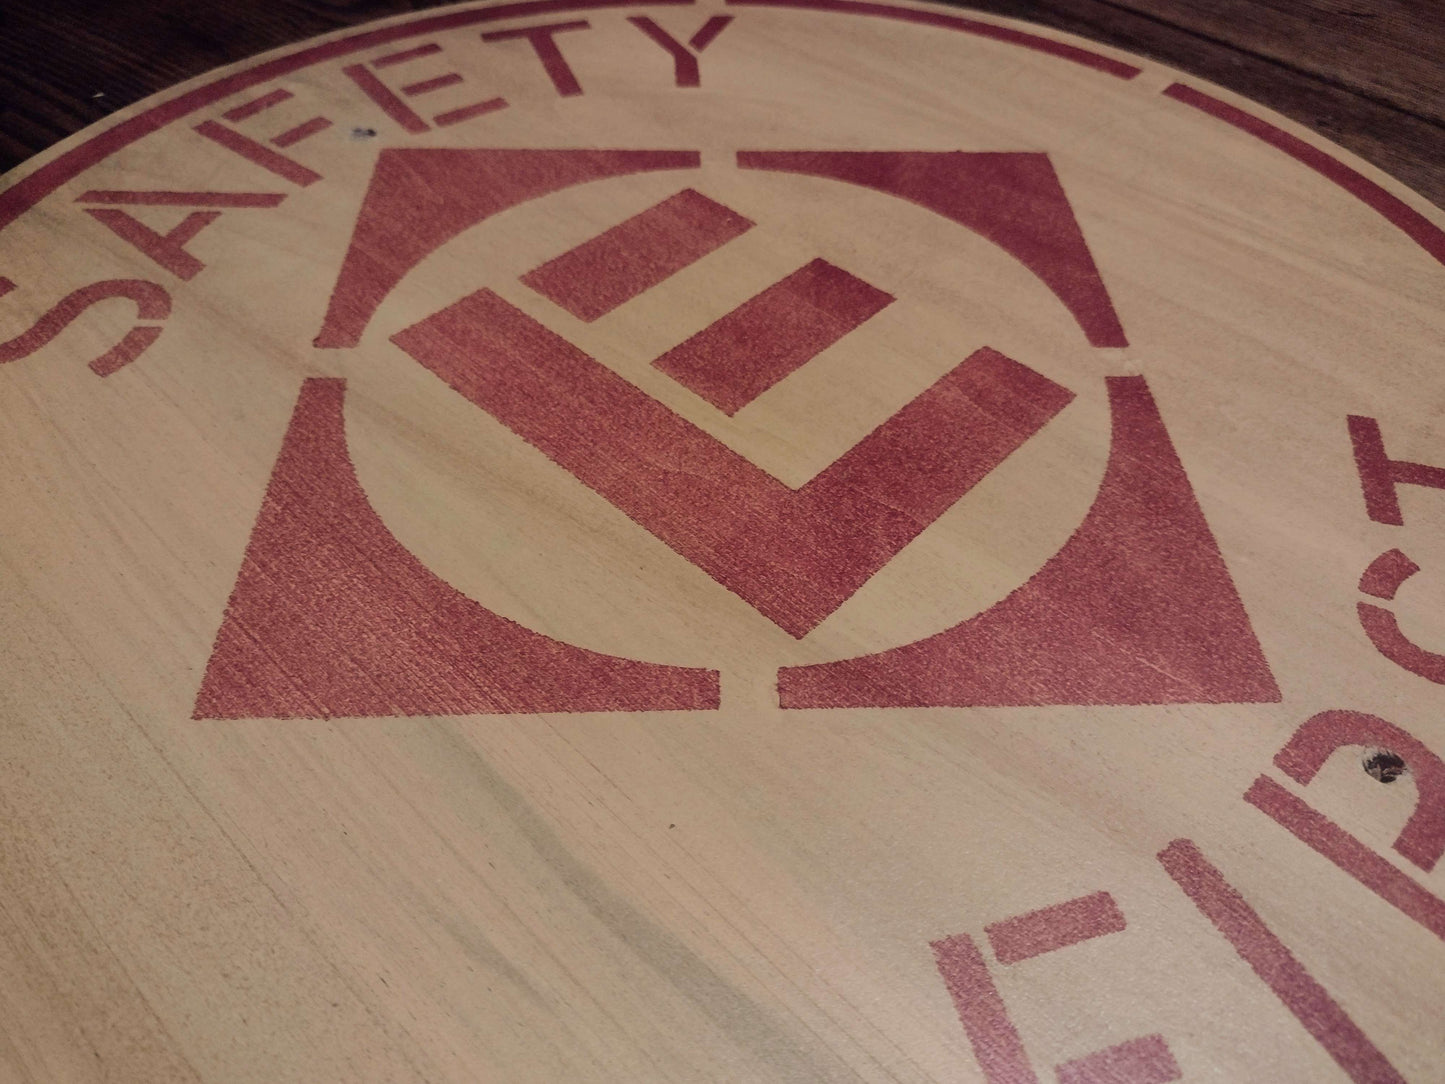 Erie Lackawanna "Safety First" Hardwood Sign